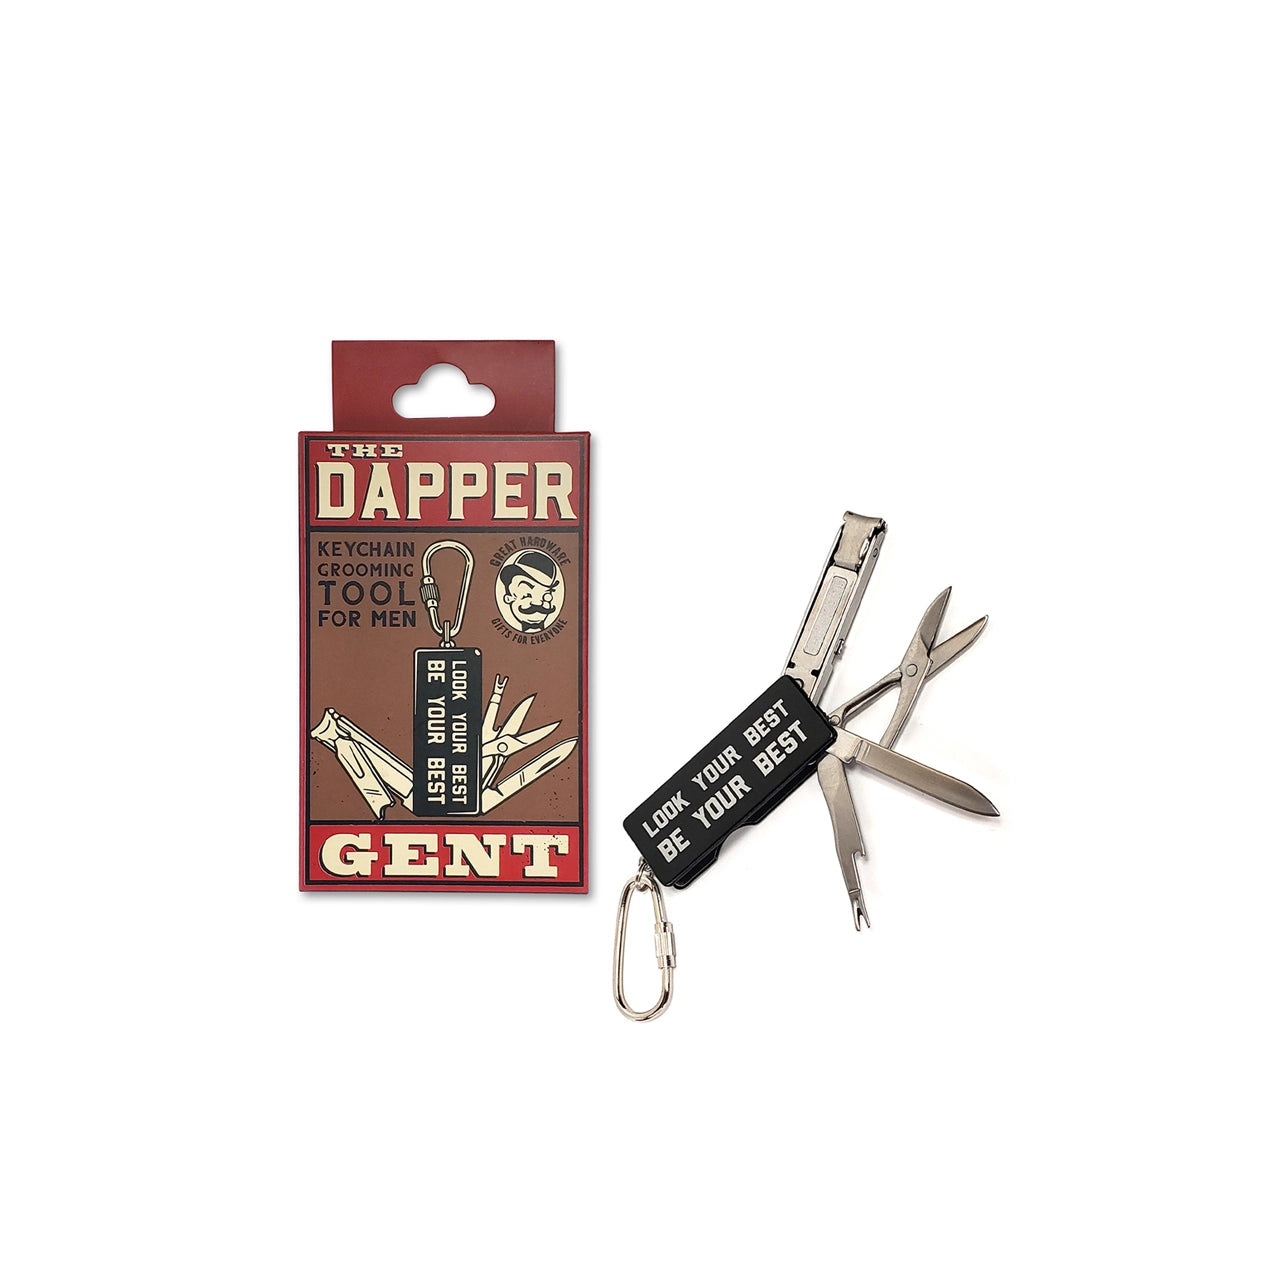 Men's Styling Tool: The Dapper Gent – Pocket Manicure Multi-tool